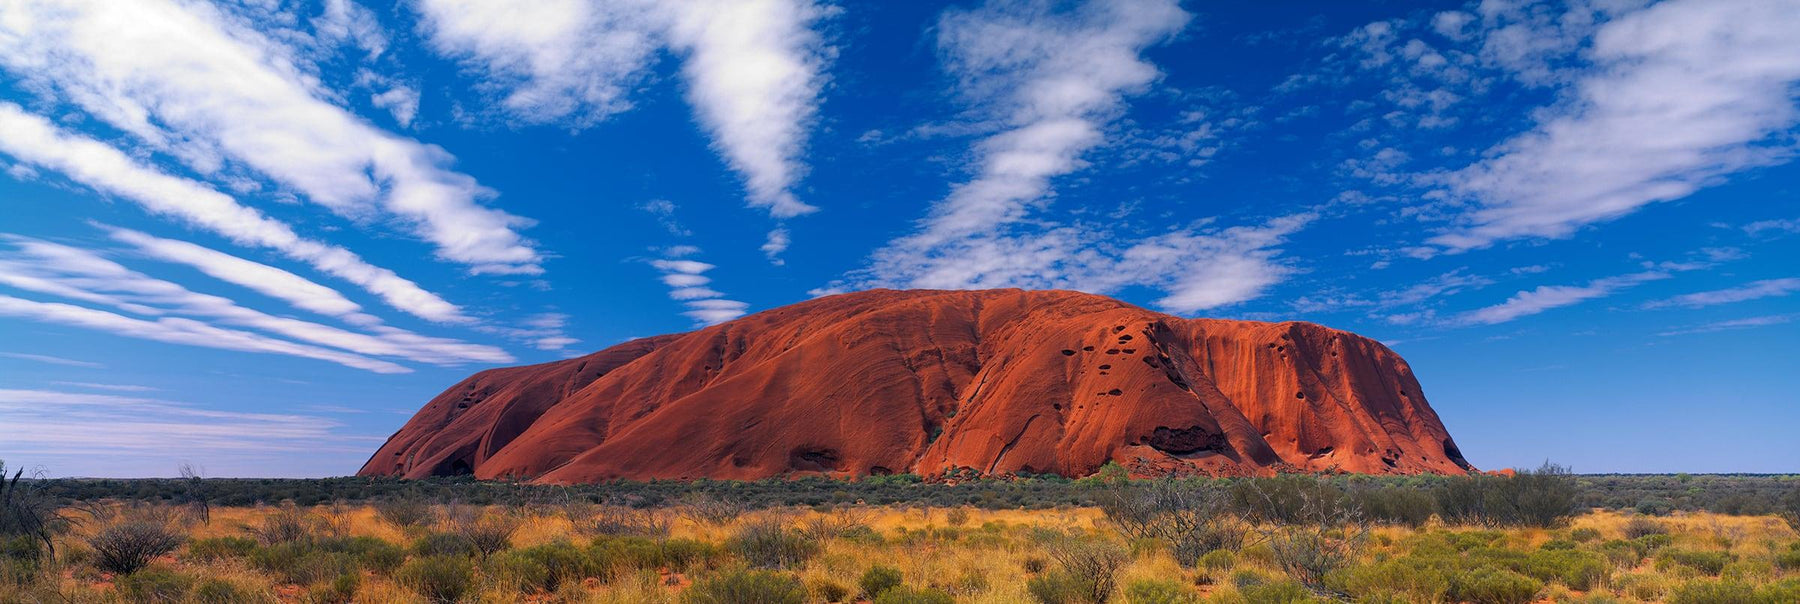 Massive sandstone monolith in the brush covered Northern Territory of Australia